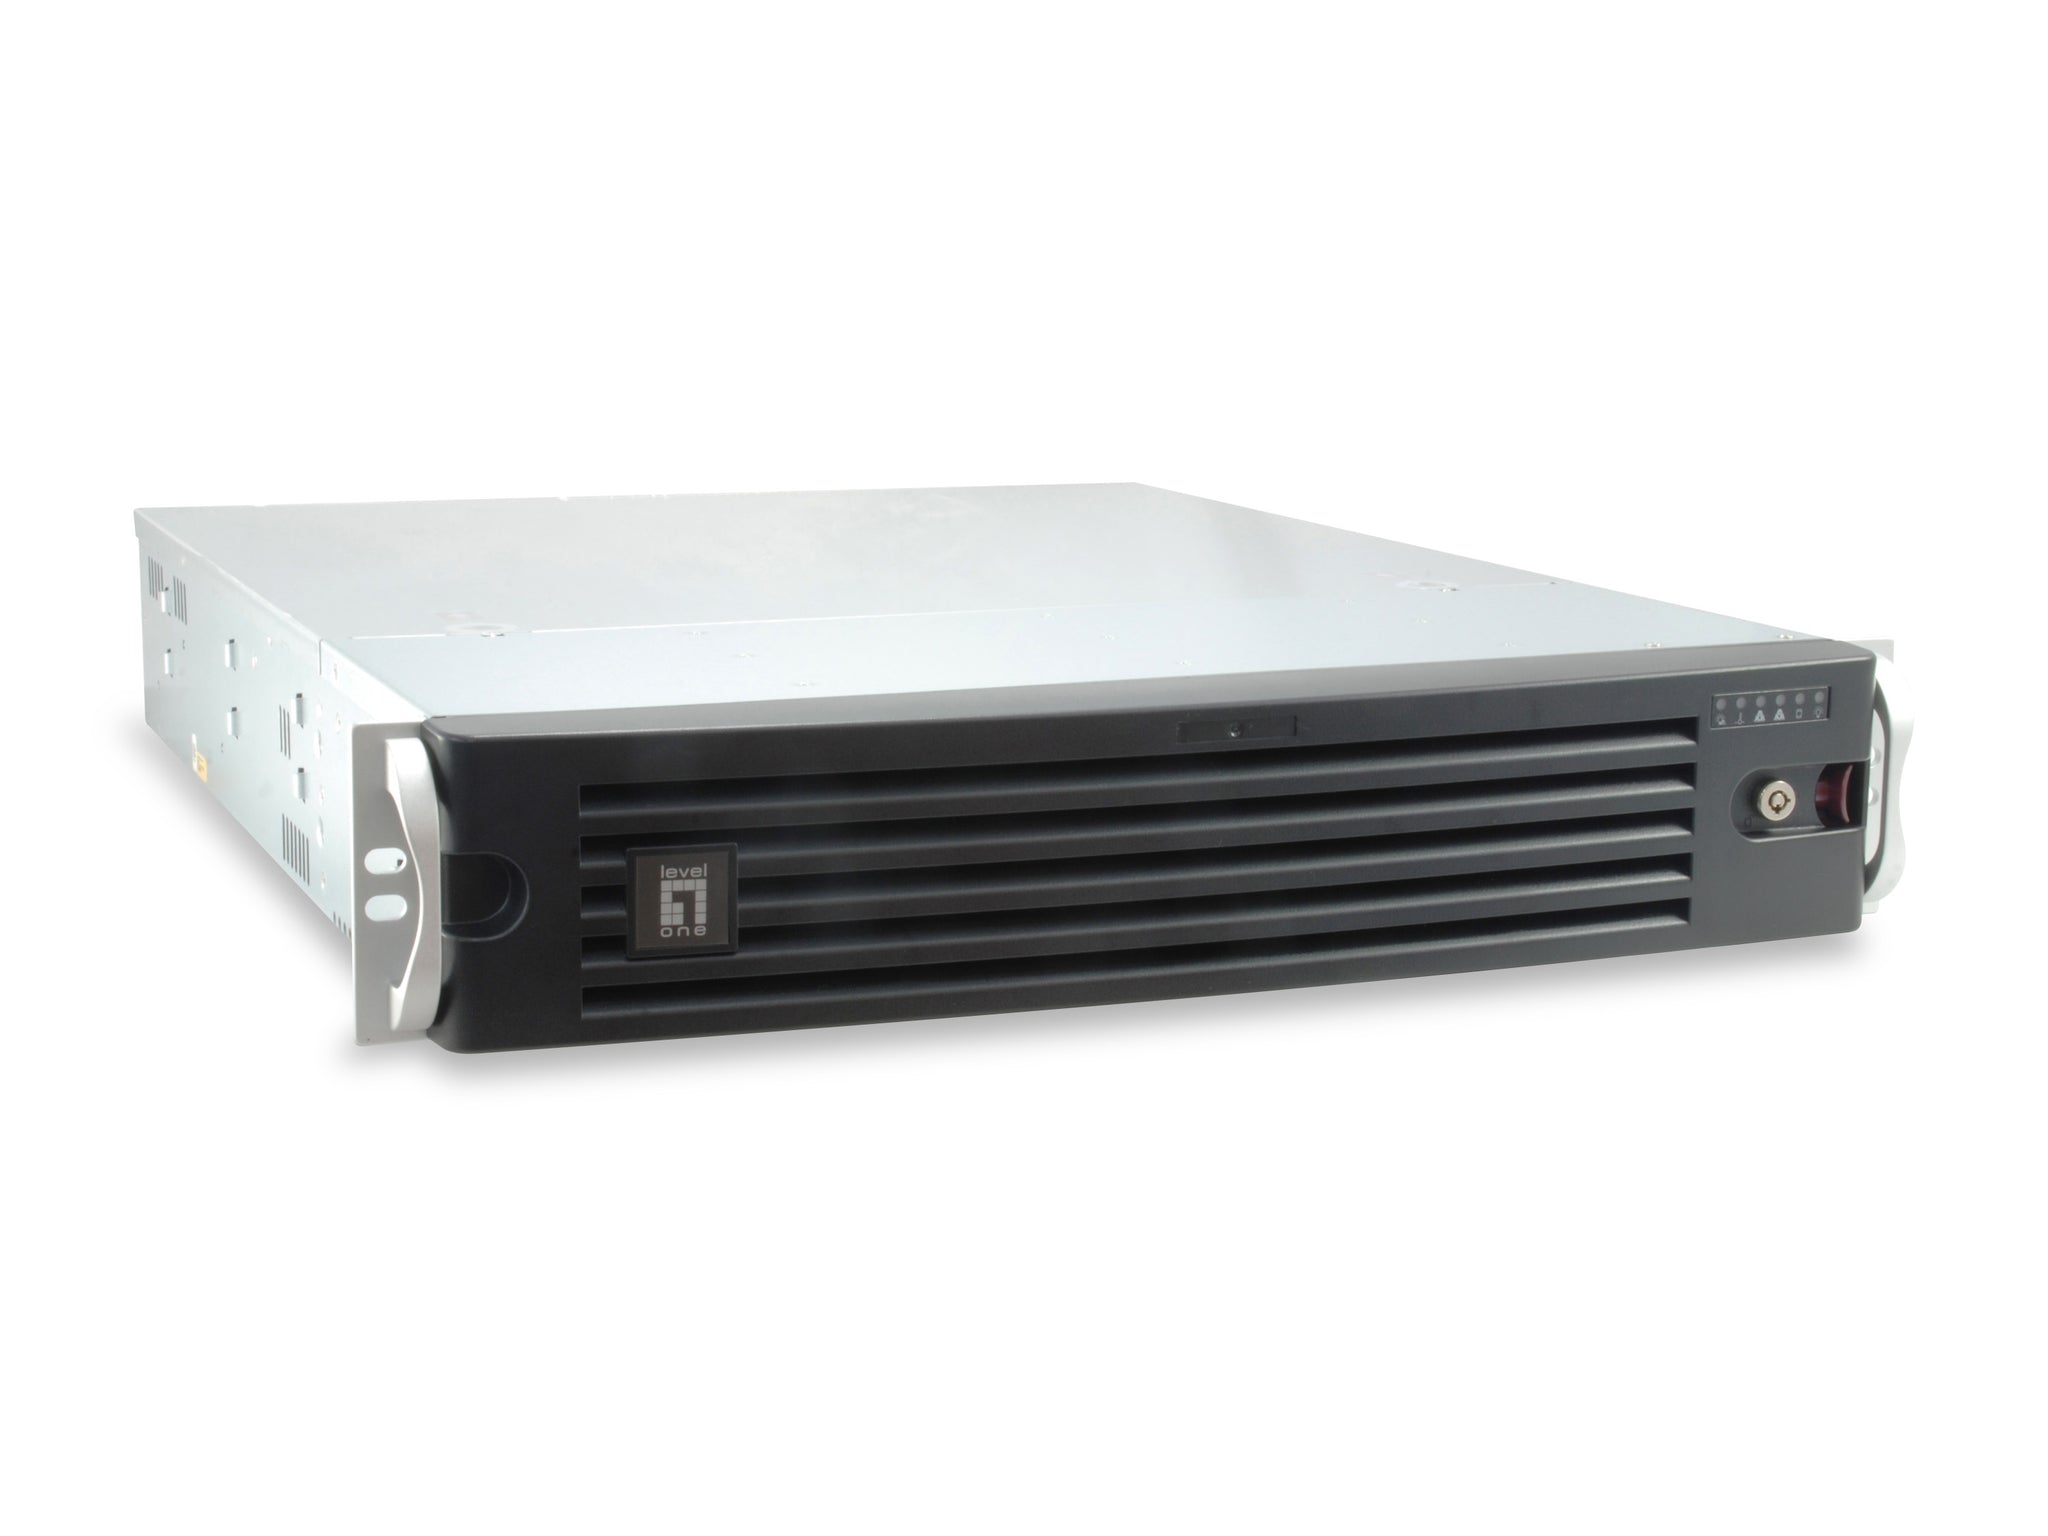 NVR-5500 Grabador de video en red de 200 canales, RAID